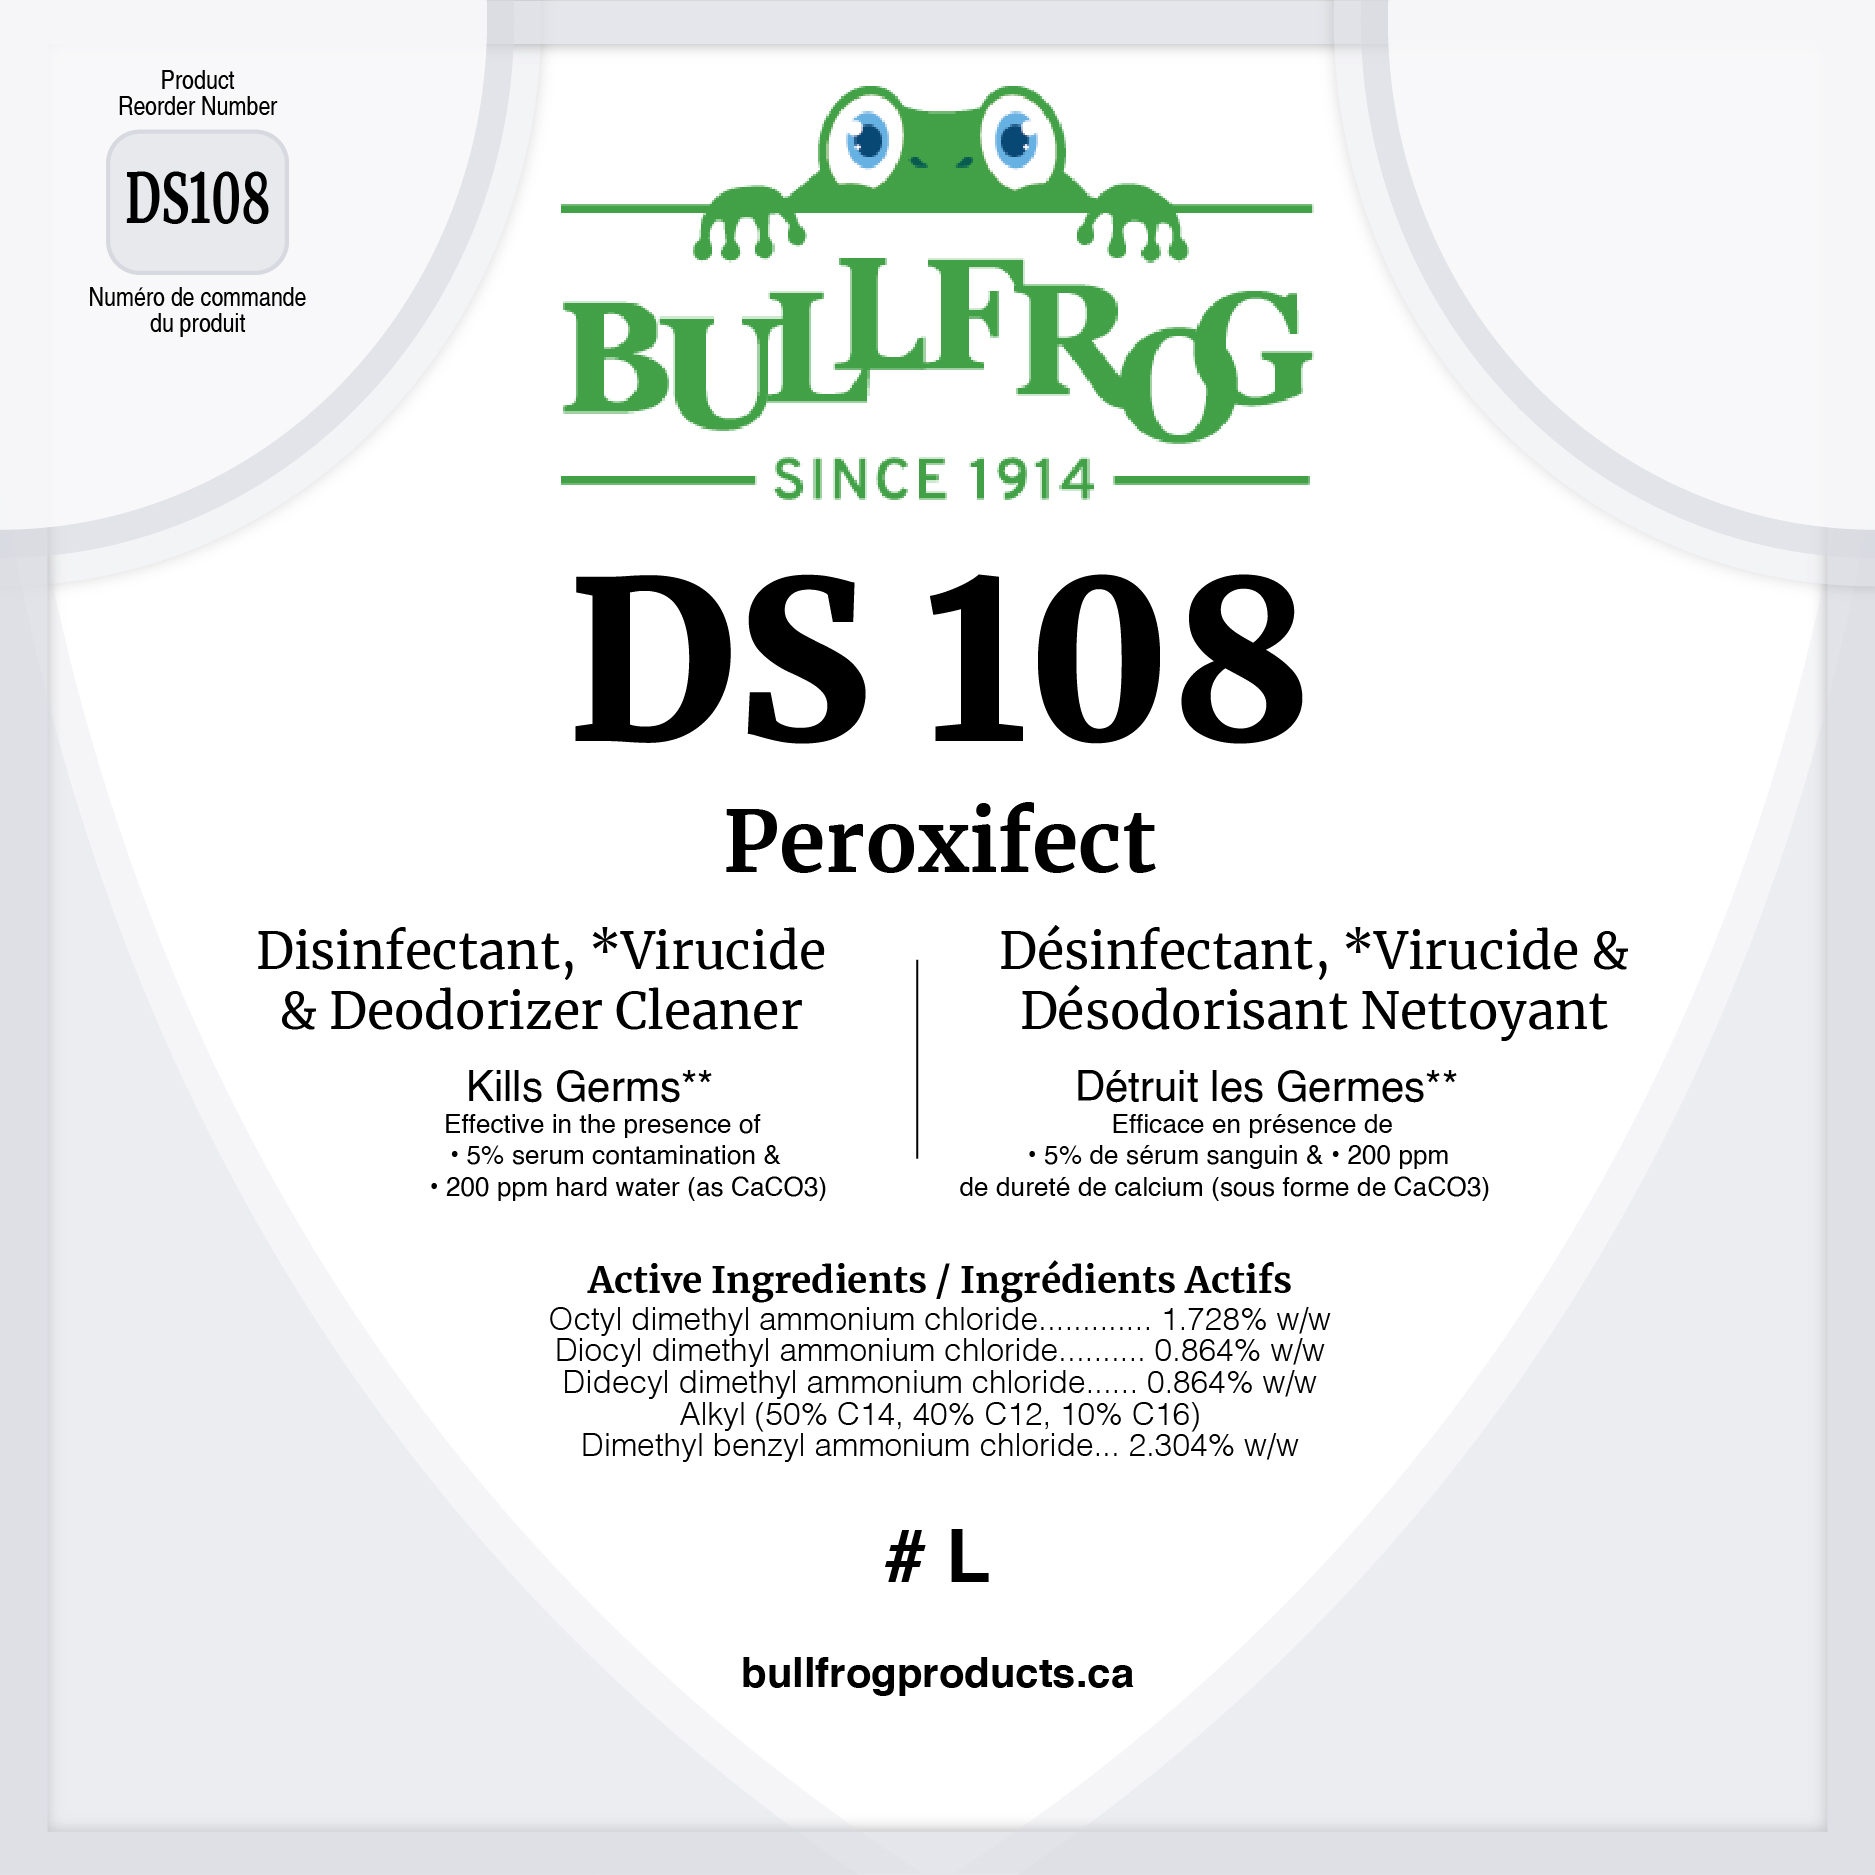 DS 108 front label image